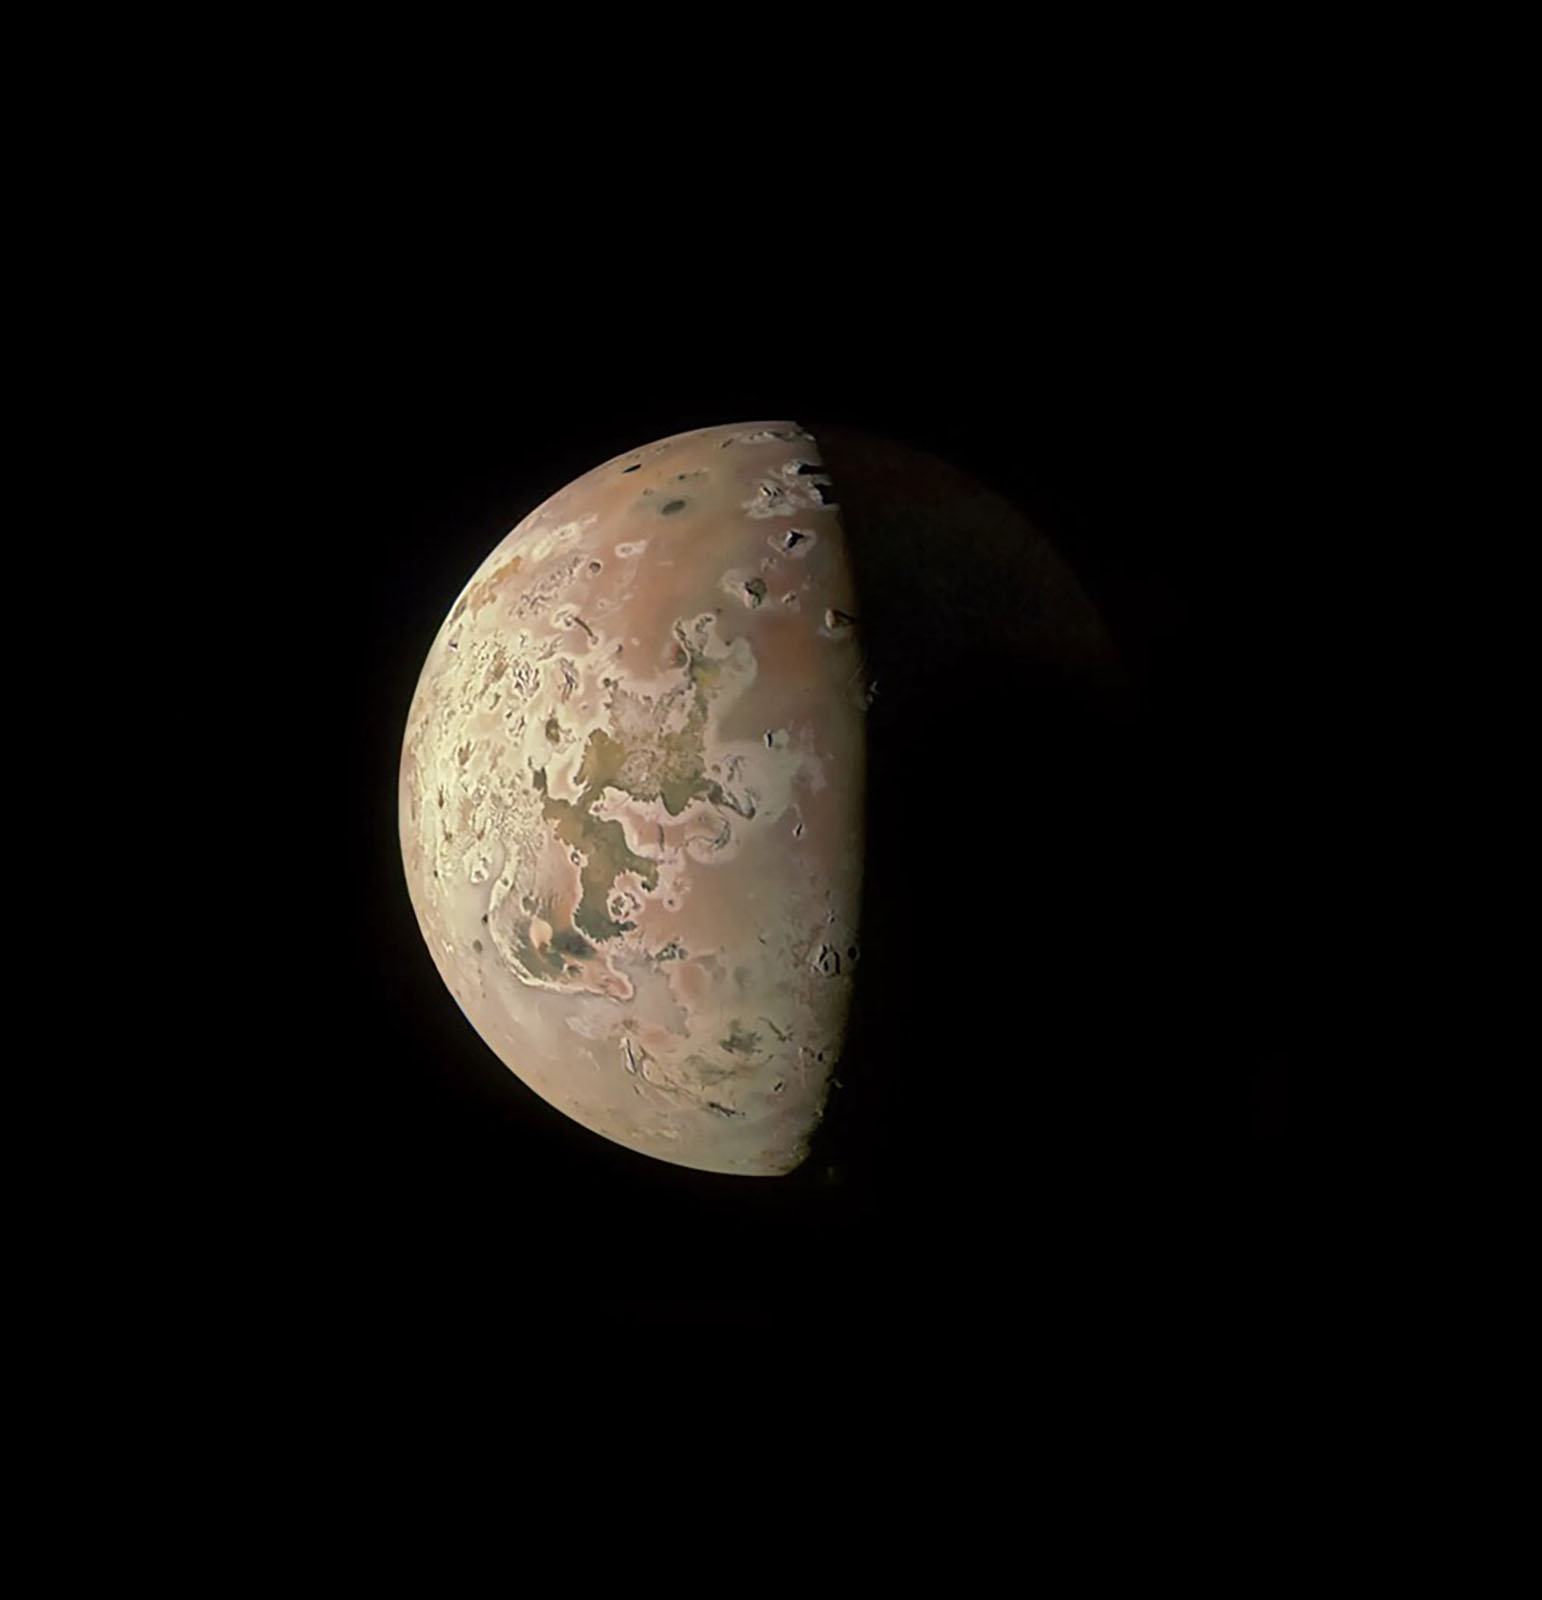 Juno spacecraft Io flyby